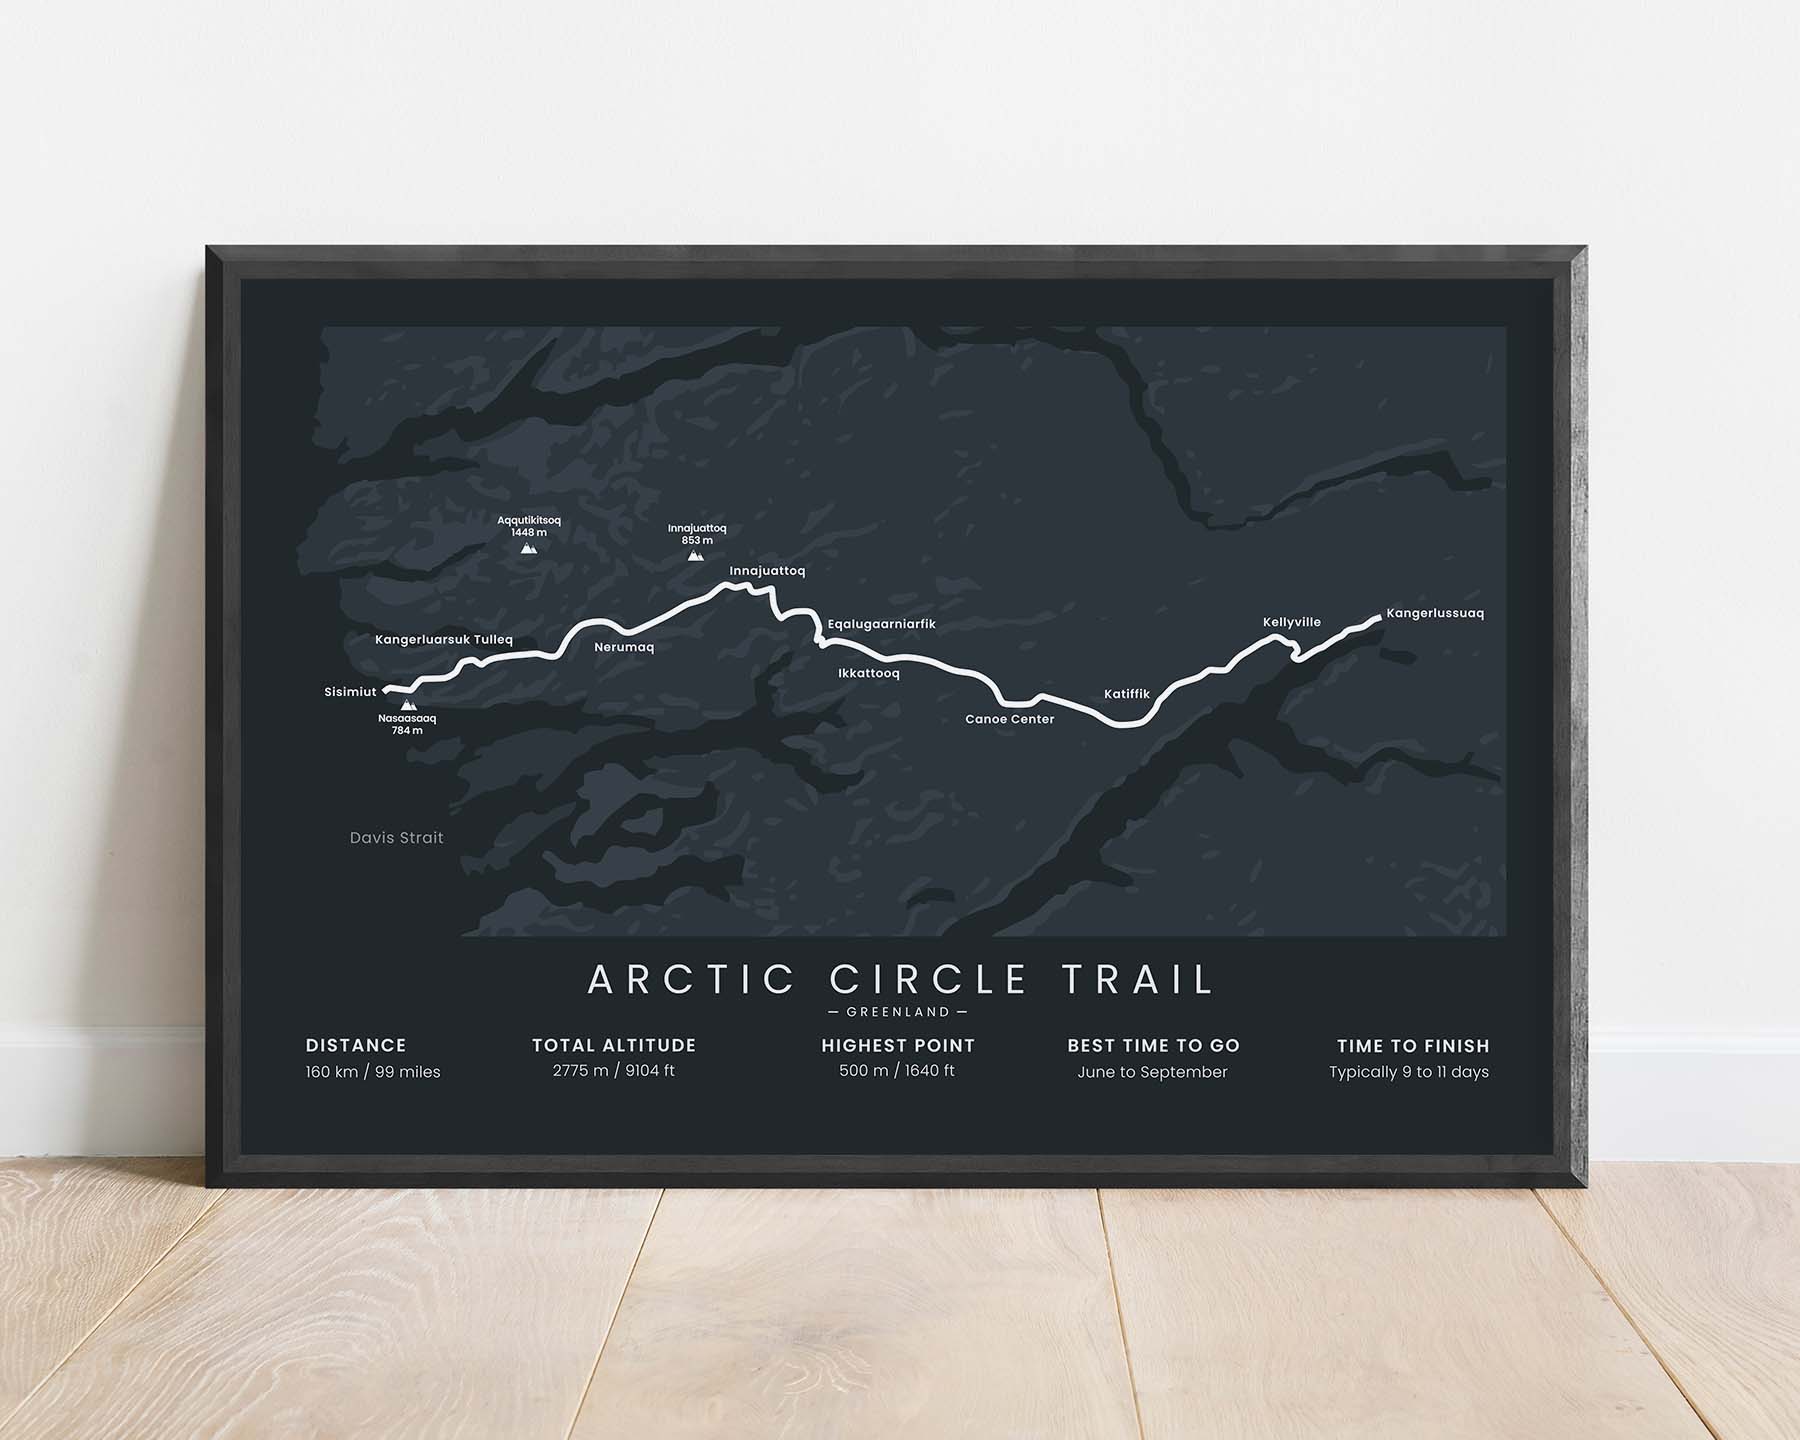 Arctic Circle Trail (Greenland, Sisimiut, Kangerlussuaq) Trail Art Print with Black Background